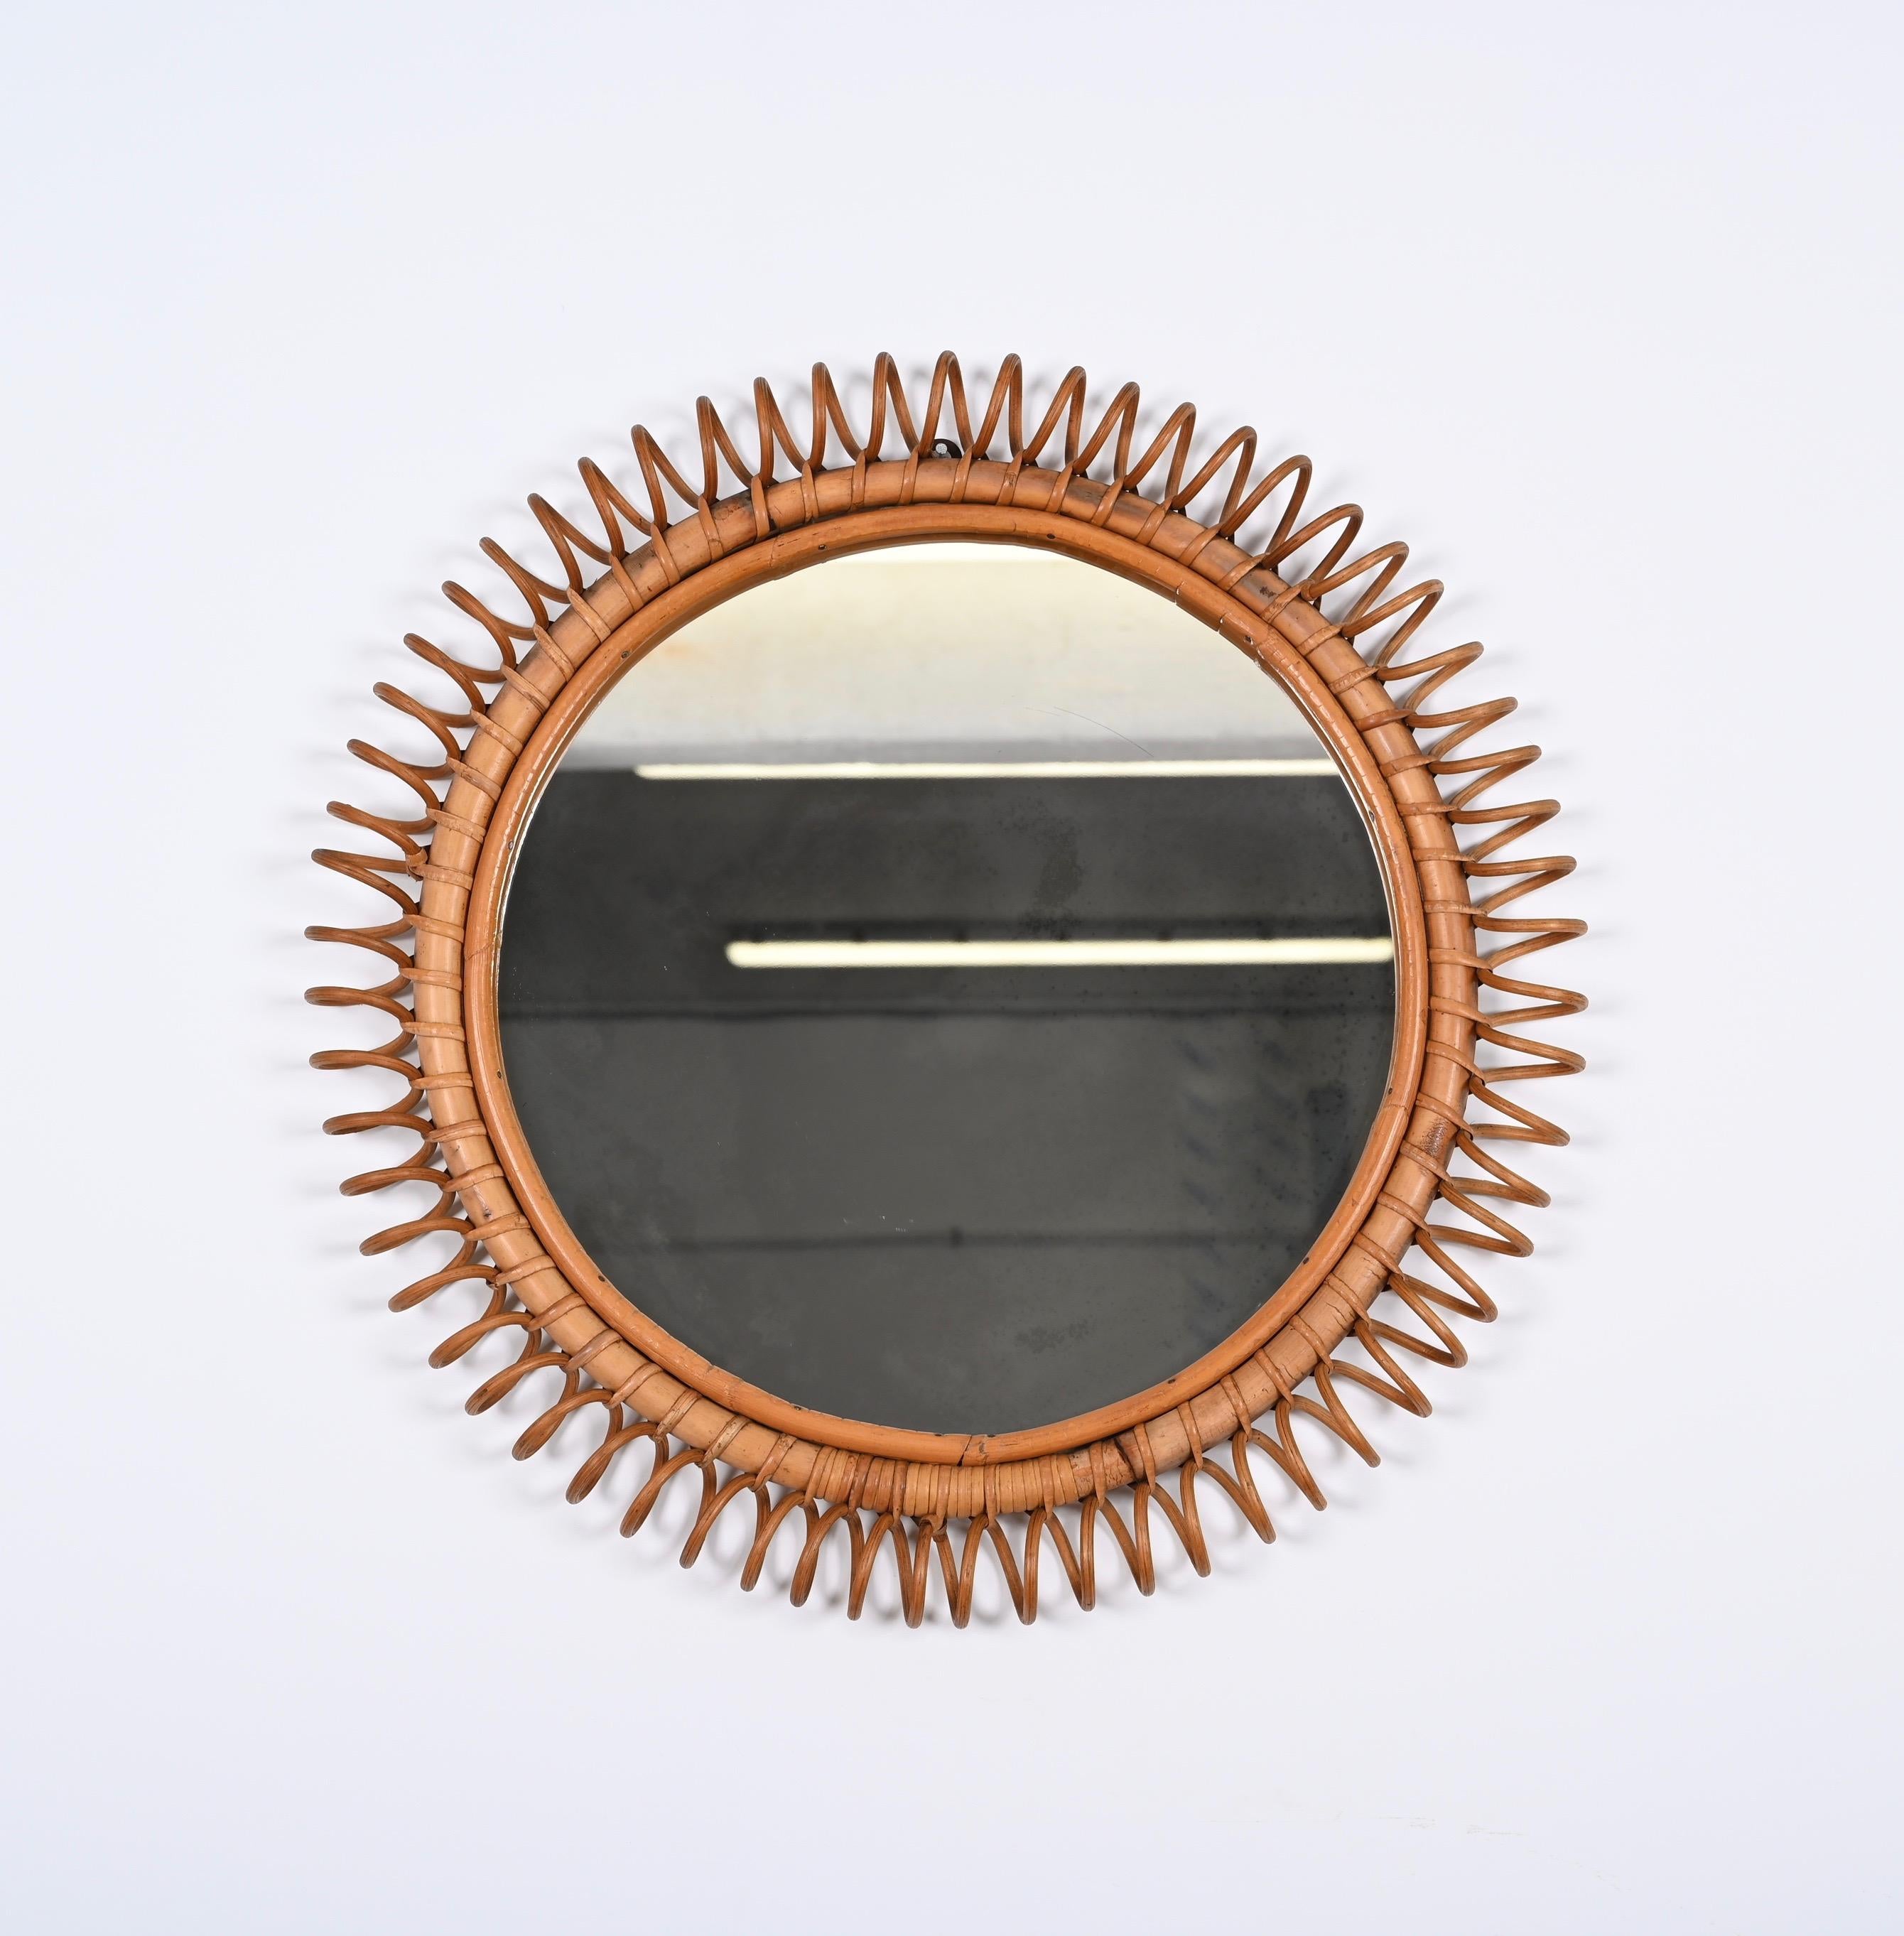 Italian Midcentury French Riviera Round Rattan Wall Mirror, Franco Albini, Italy 1960s